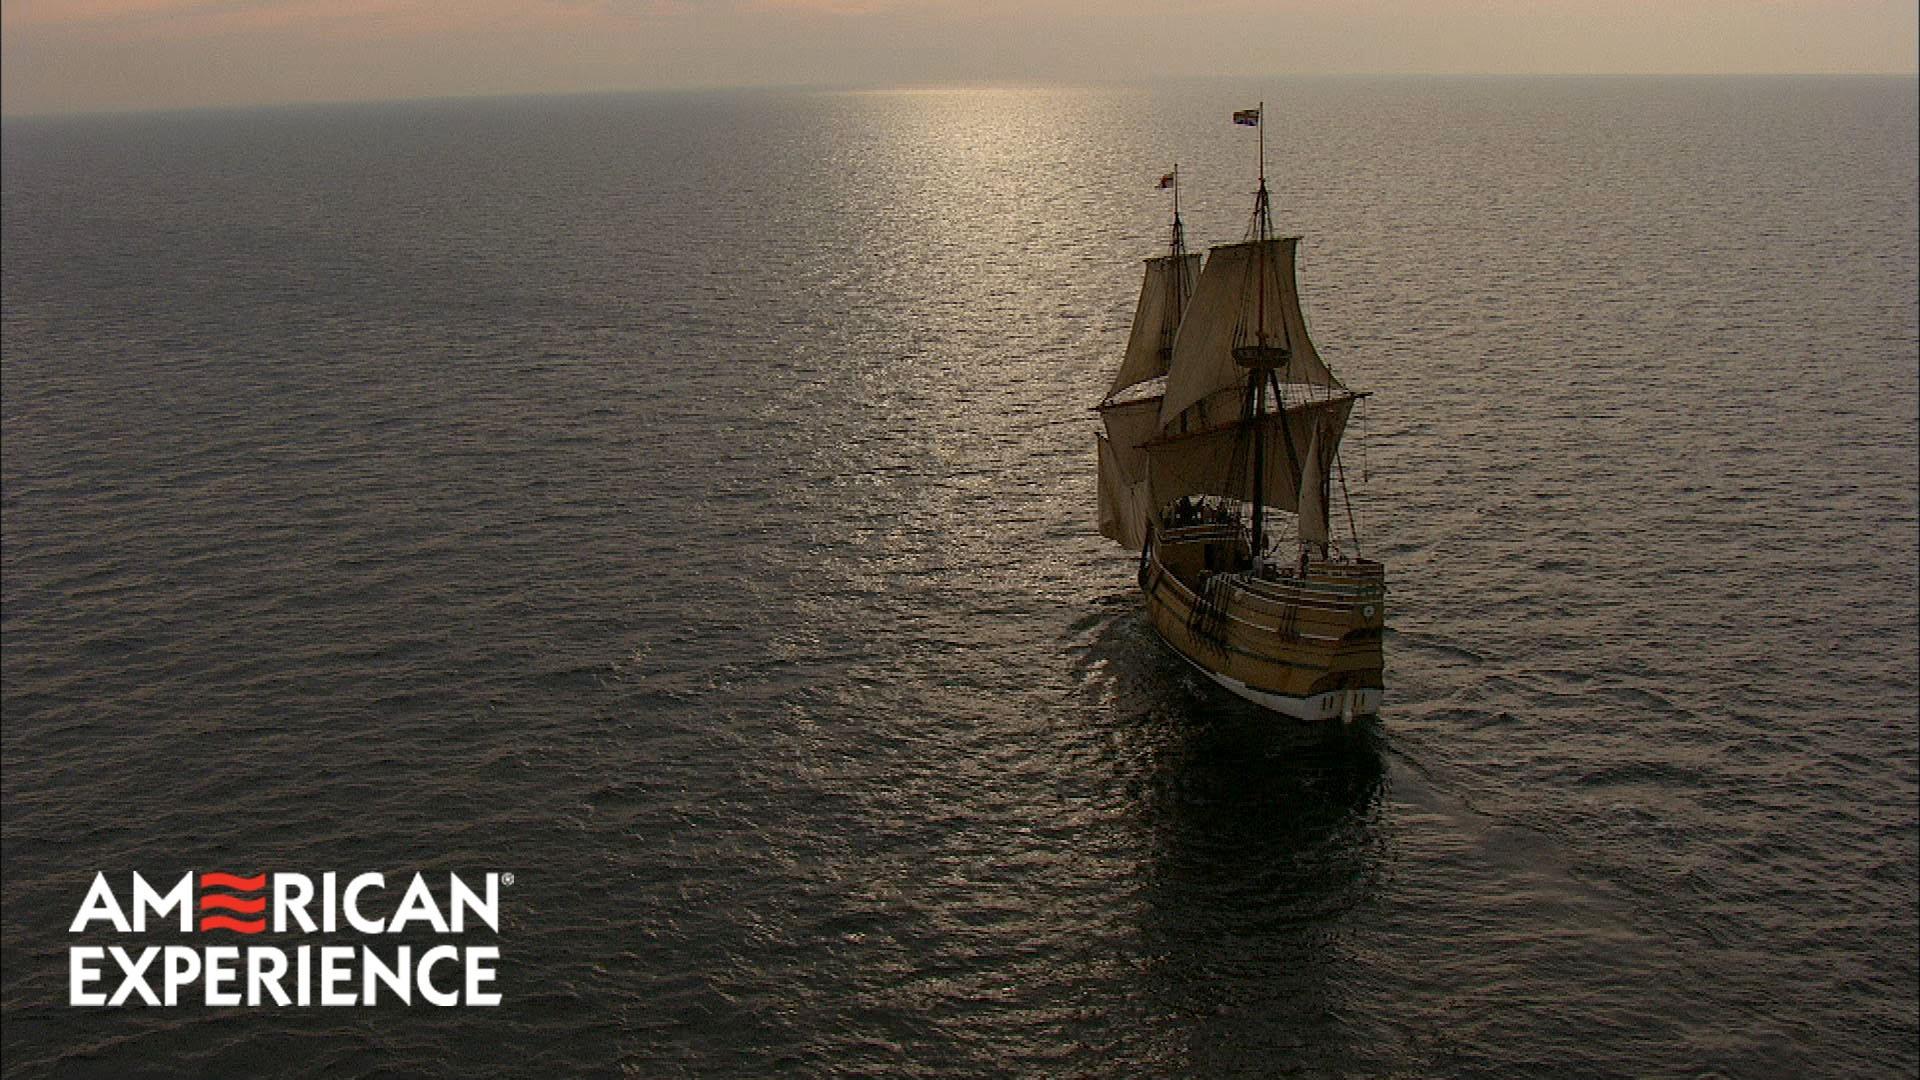 The Mayflower sailing ship on the ocean